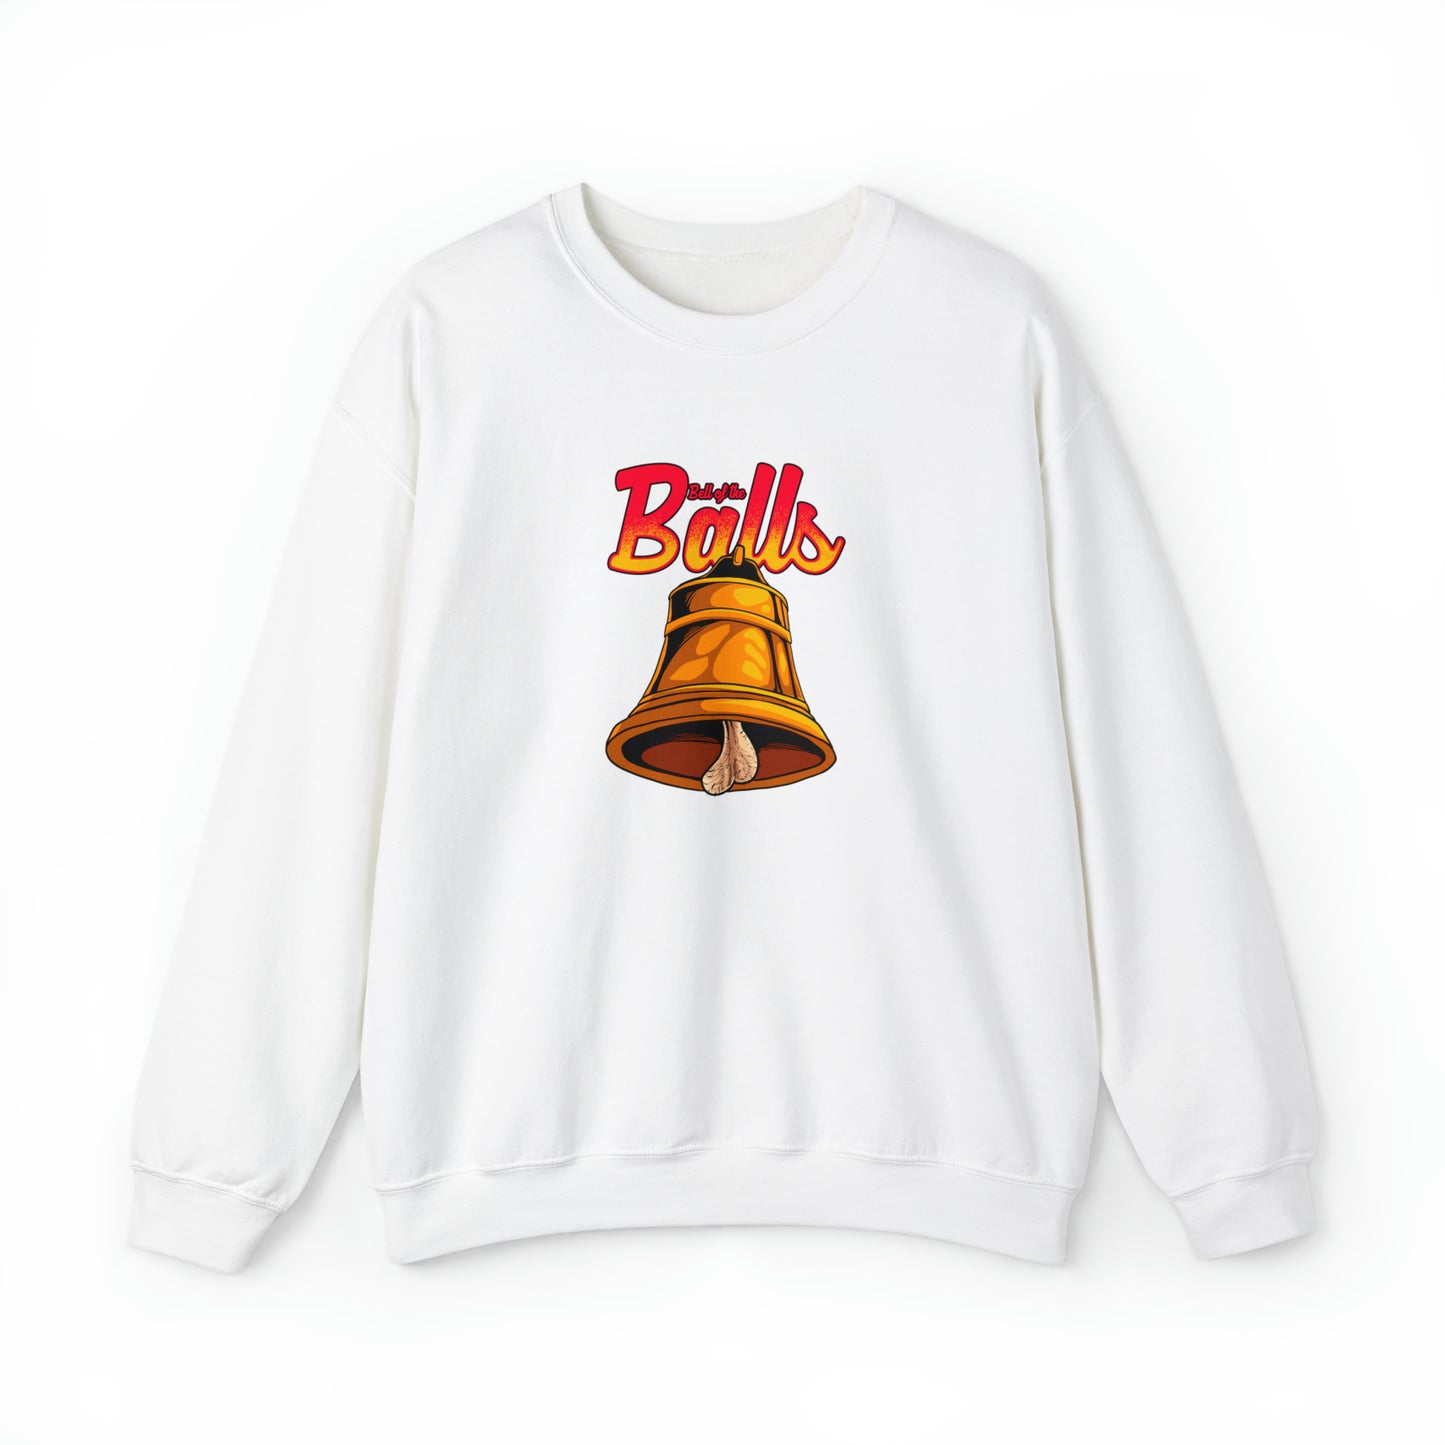 Custom Parody Crewneck Sweatshirt, Bell of the Balls Design